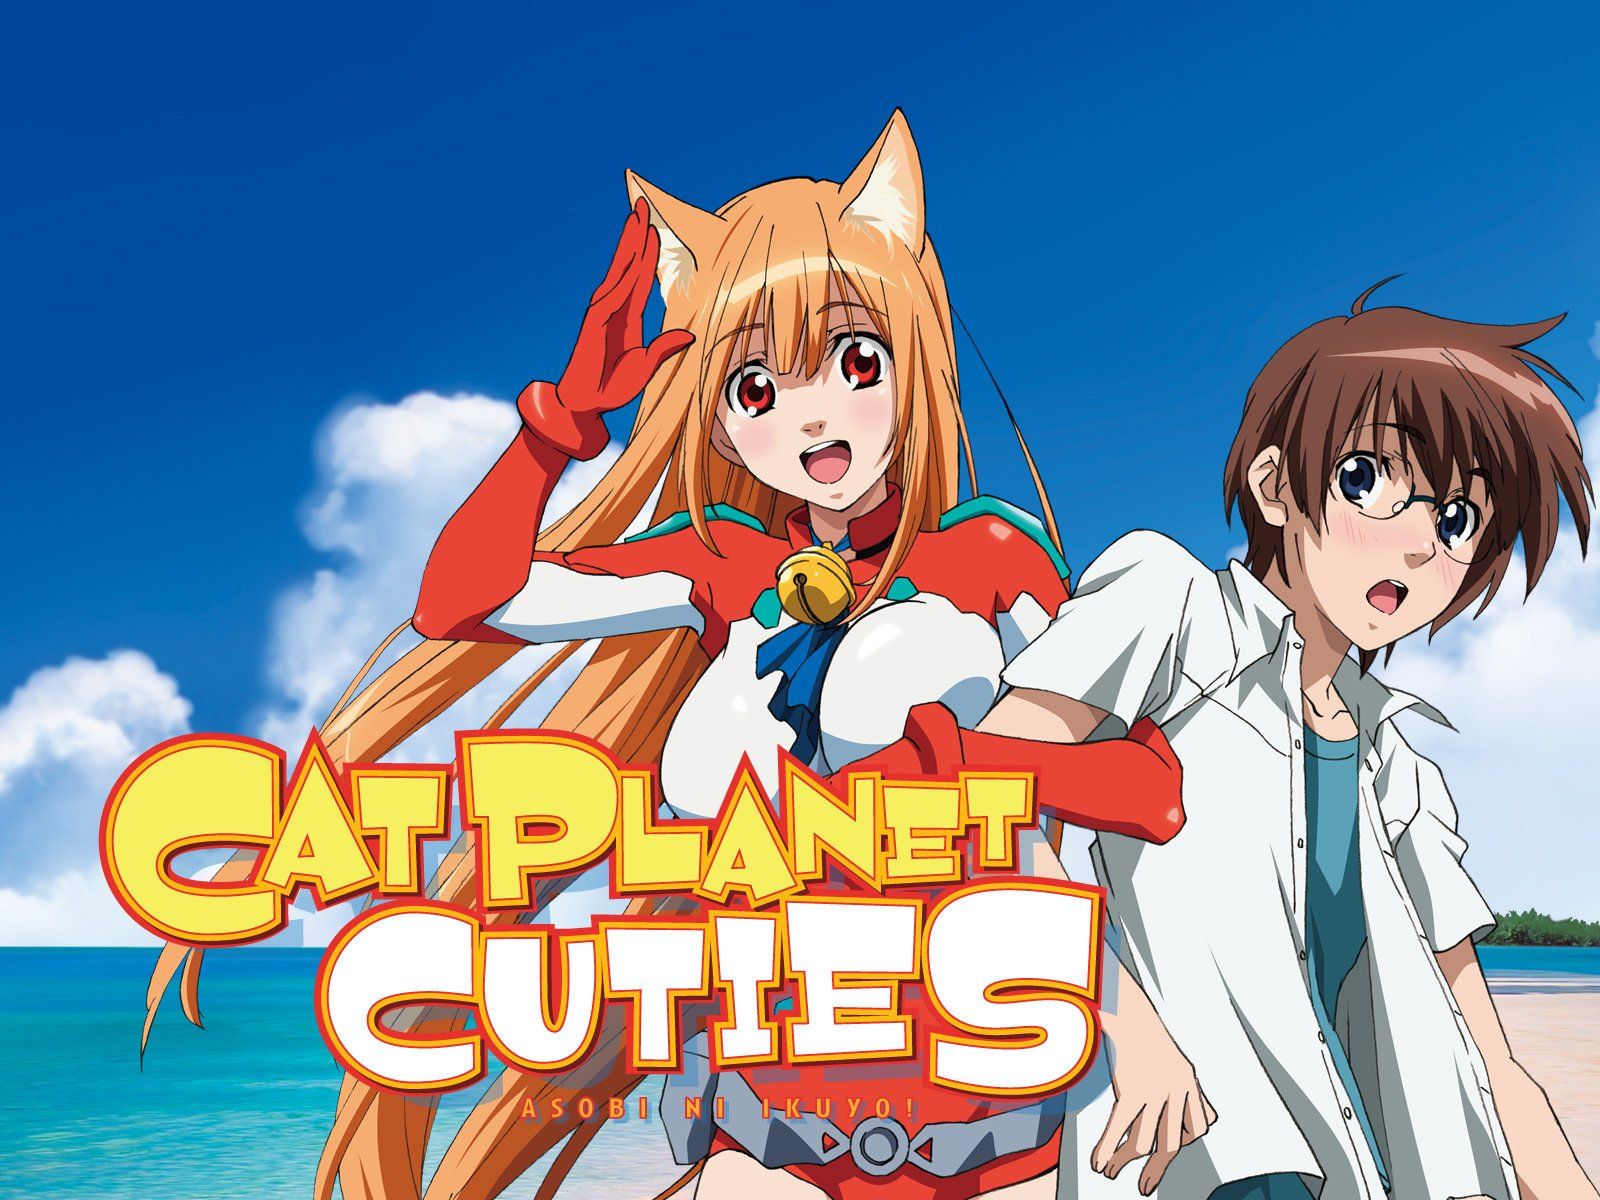 Watch Cat Planet Cuties.